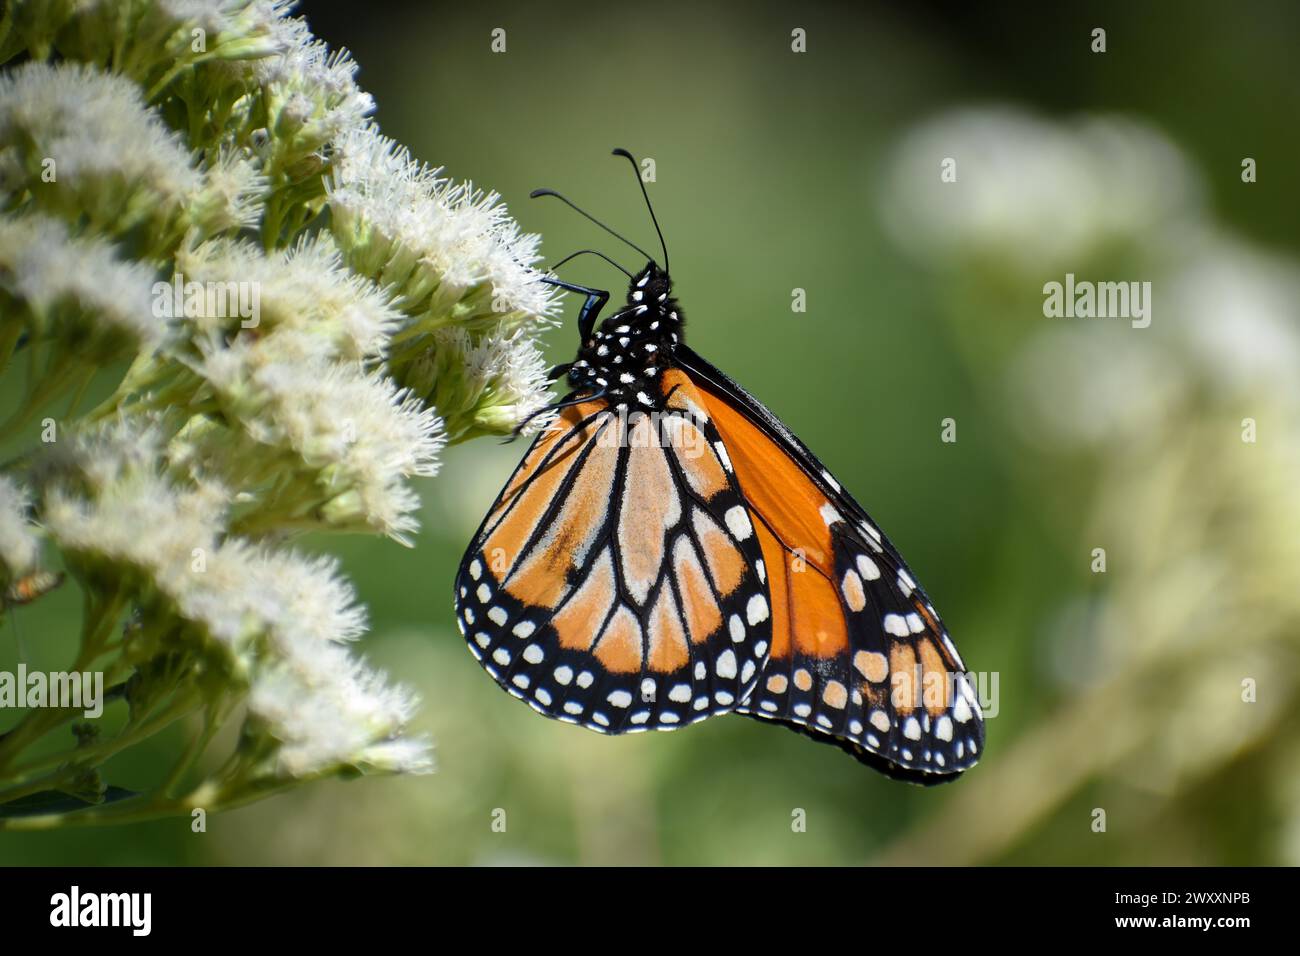 Monarch butterfly (danaus erippus, the sister species of Danaus plexippus) on wildflower Austroeupatorium inulifolium, in Spanish mariposera, seen in Stock Photo